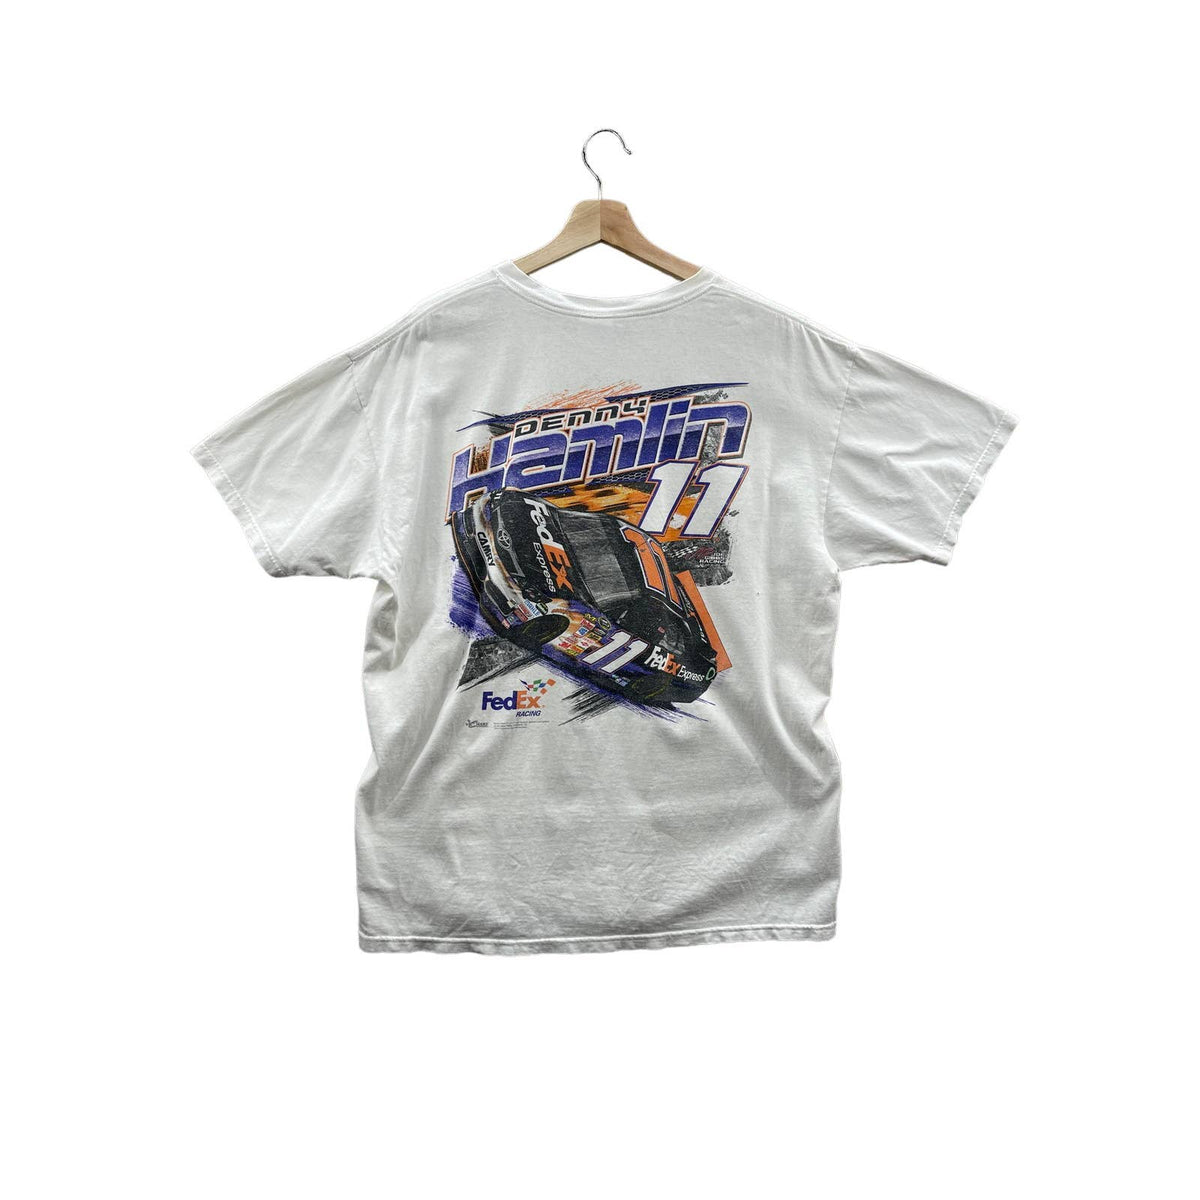 Vintage 2000's Chase Authentics Denny Hamlin #11 Nascar Racing T-Shirt